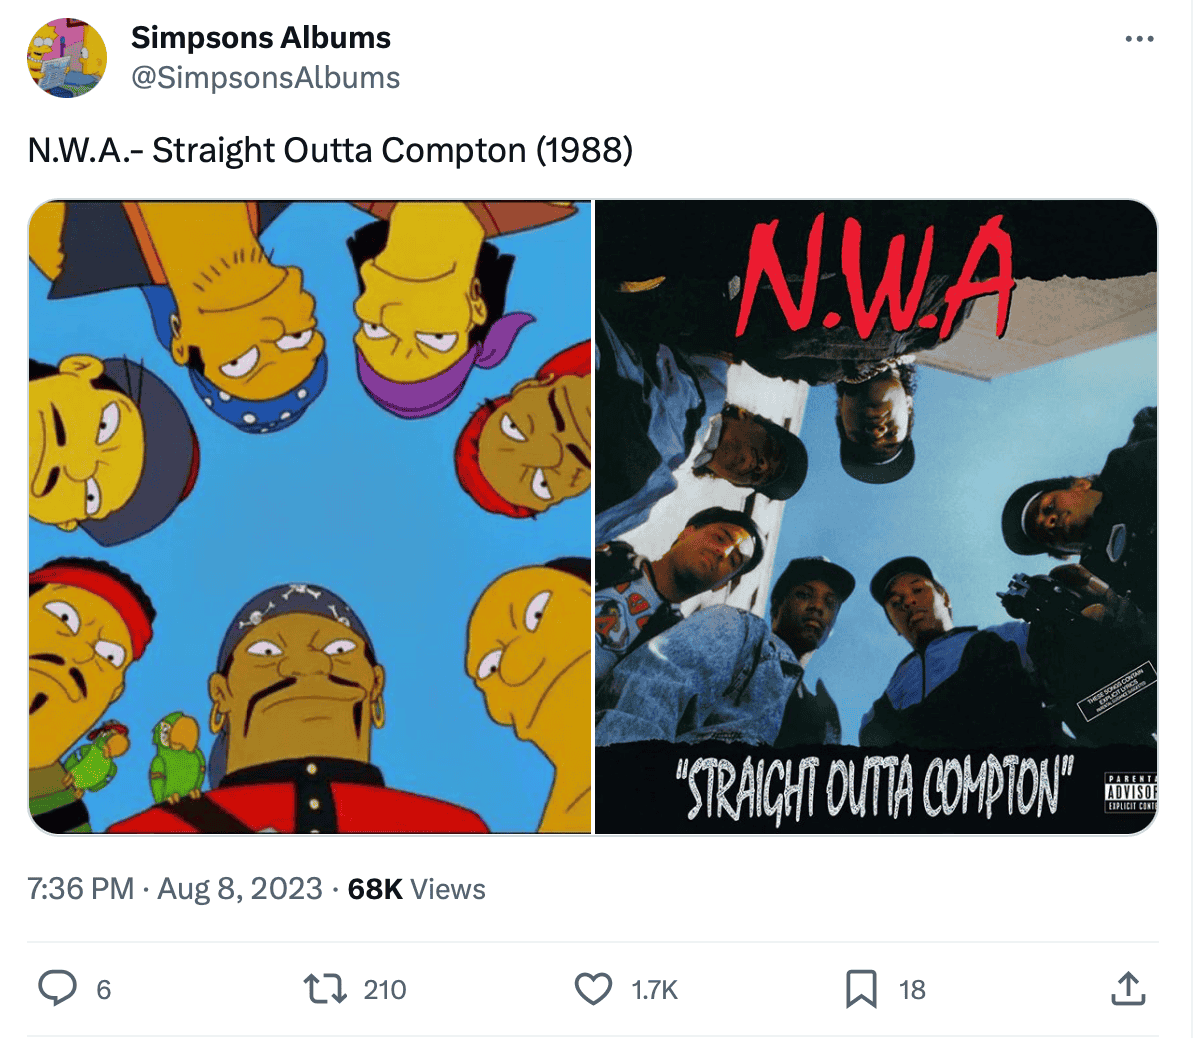 The Simpsons and Album Art